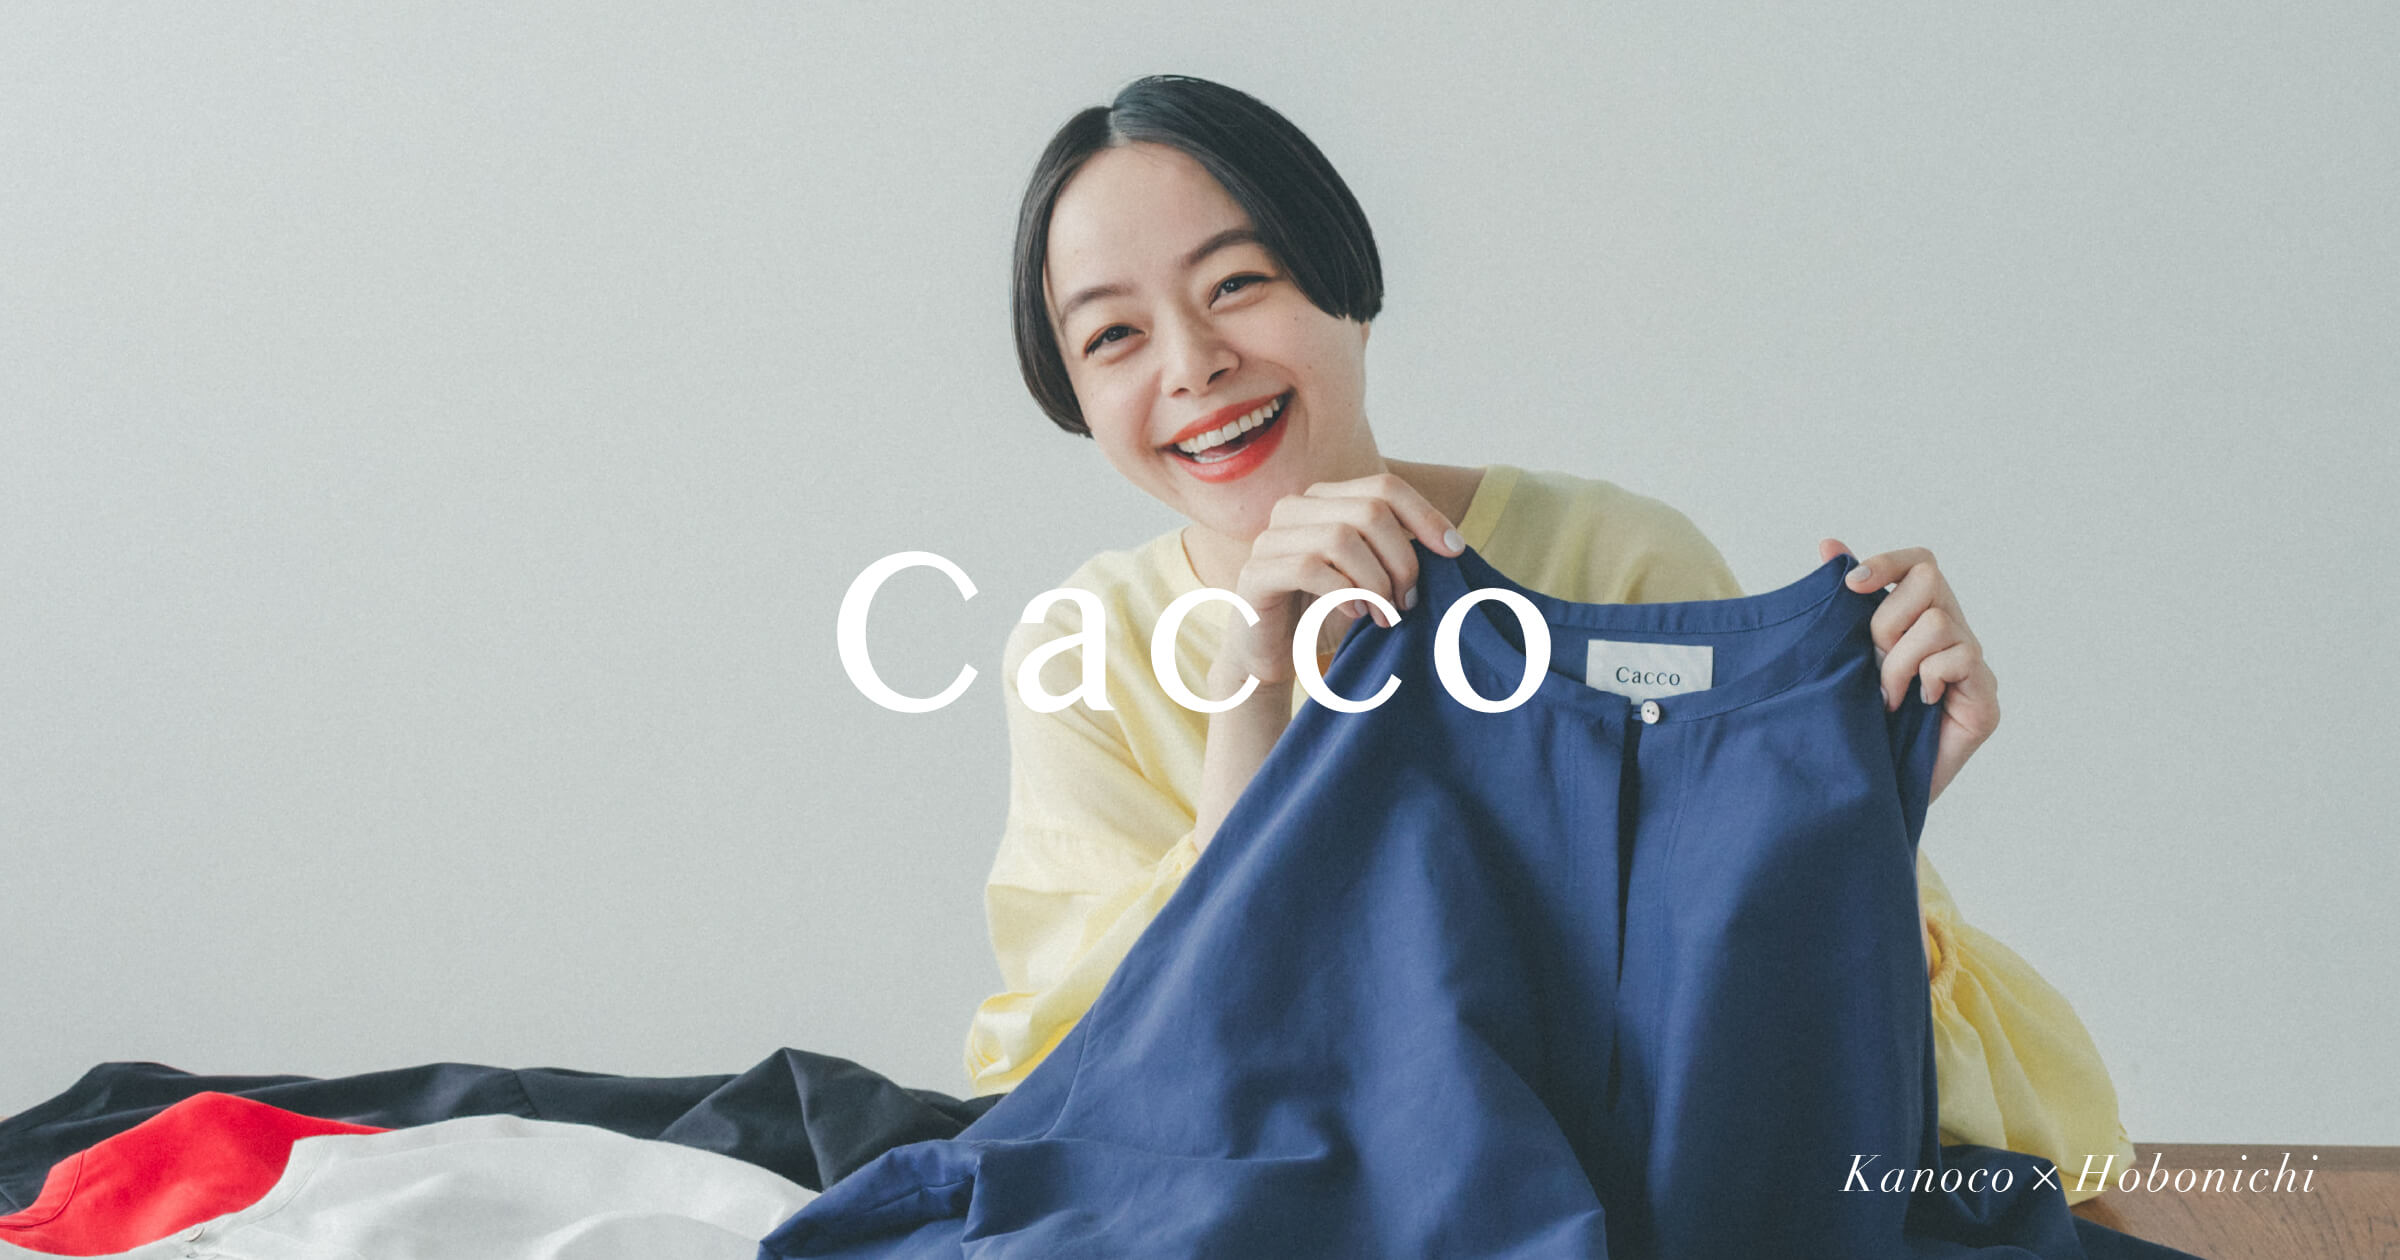 Cacco］Kanoco＋Hobonichi - ほぼ日刊イトイ新聞